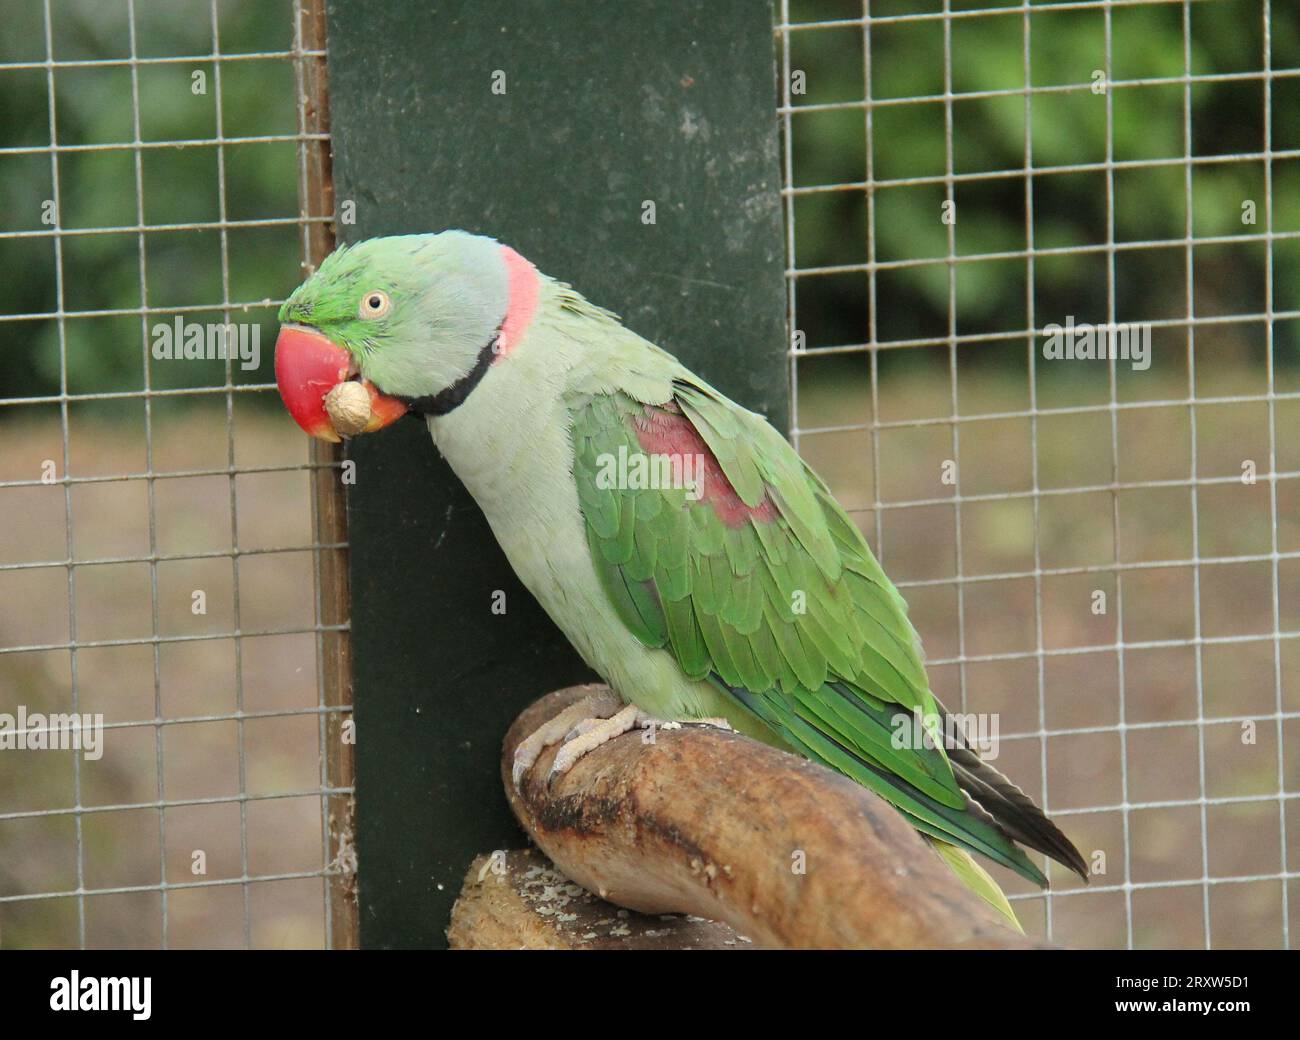 A Ringneck Parakeet Parrot Bird Eating a Peanut Kernel. Stock Photo